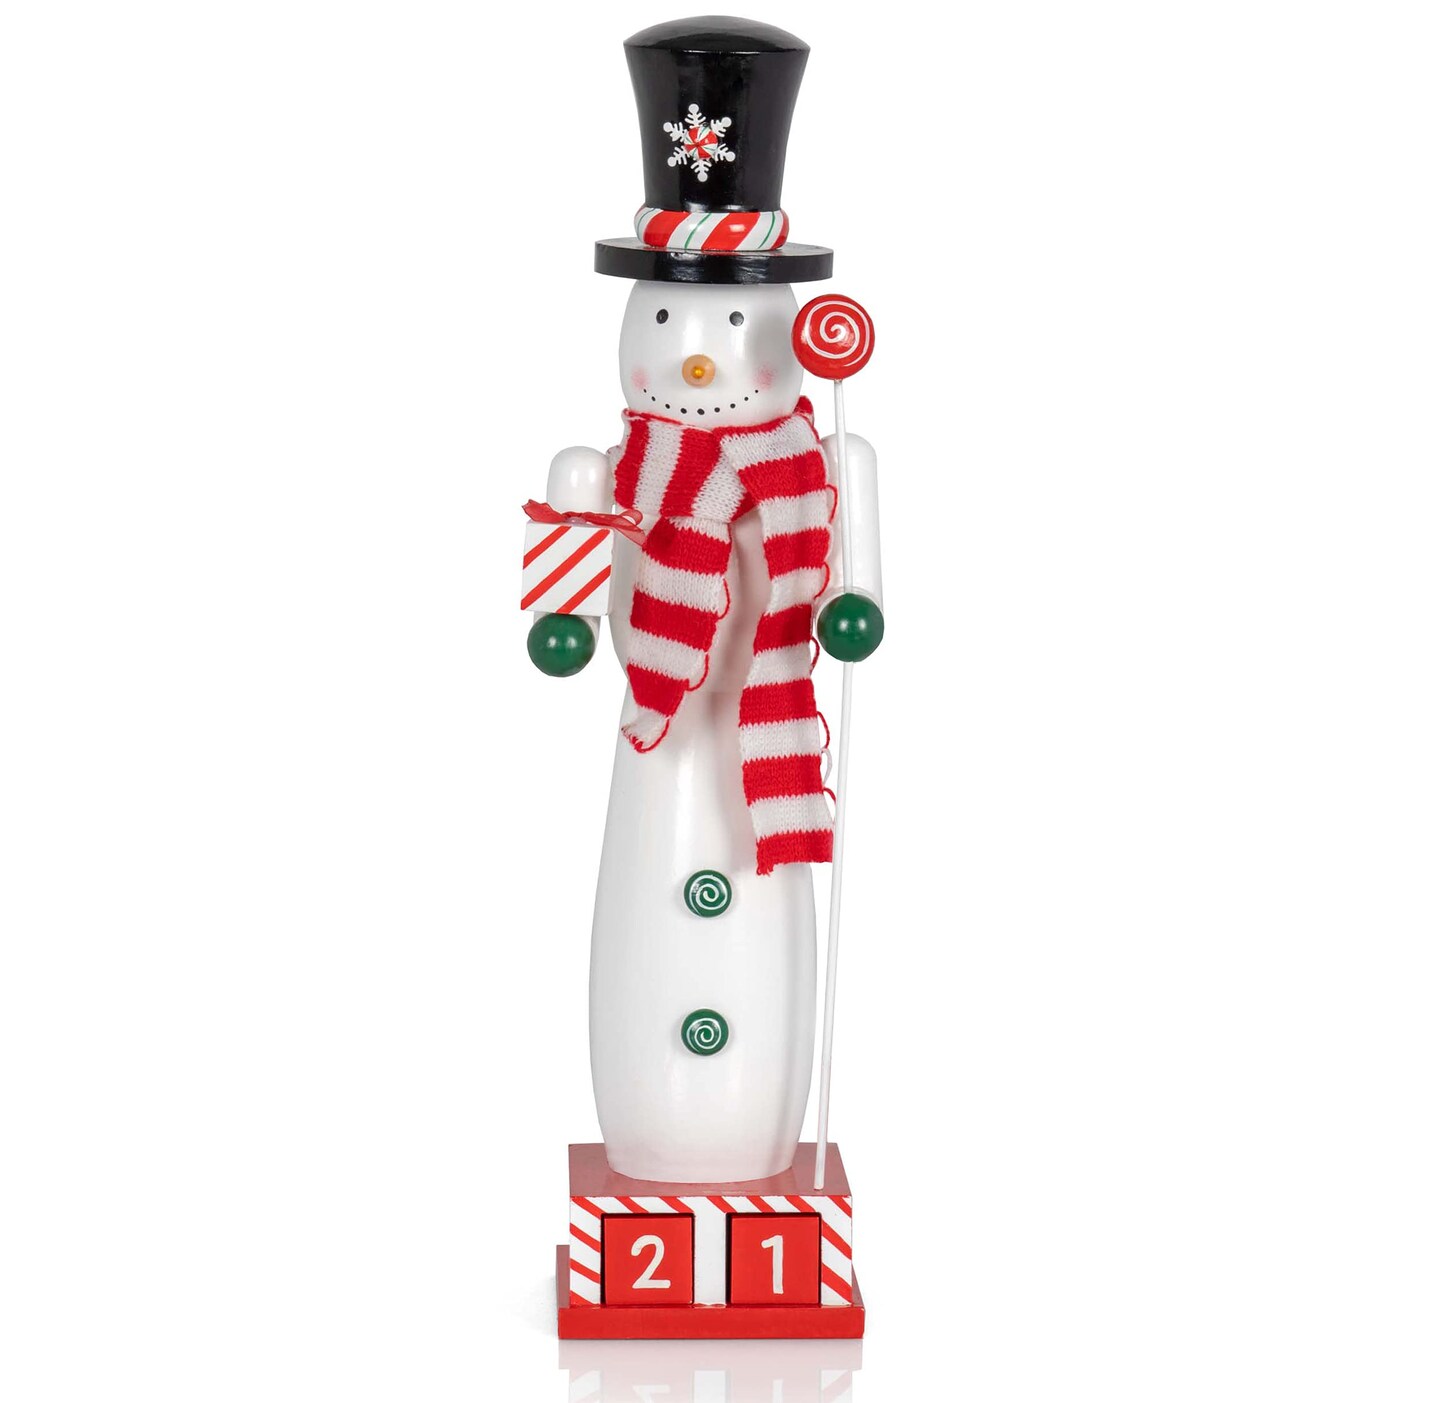 Ornativity Christmas Snowman Countdown Nutcracker &#x2013; Wooden Snow Man Nutcracker with Advent Calendar Count Down to Christmas Base Xmas Themed Holiday Nut Cracker Doll Figure Decorations